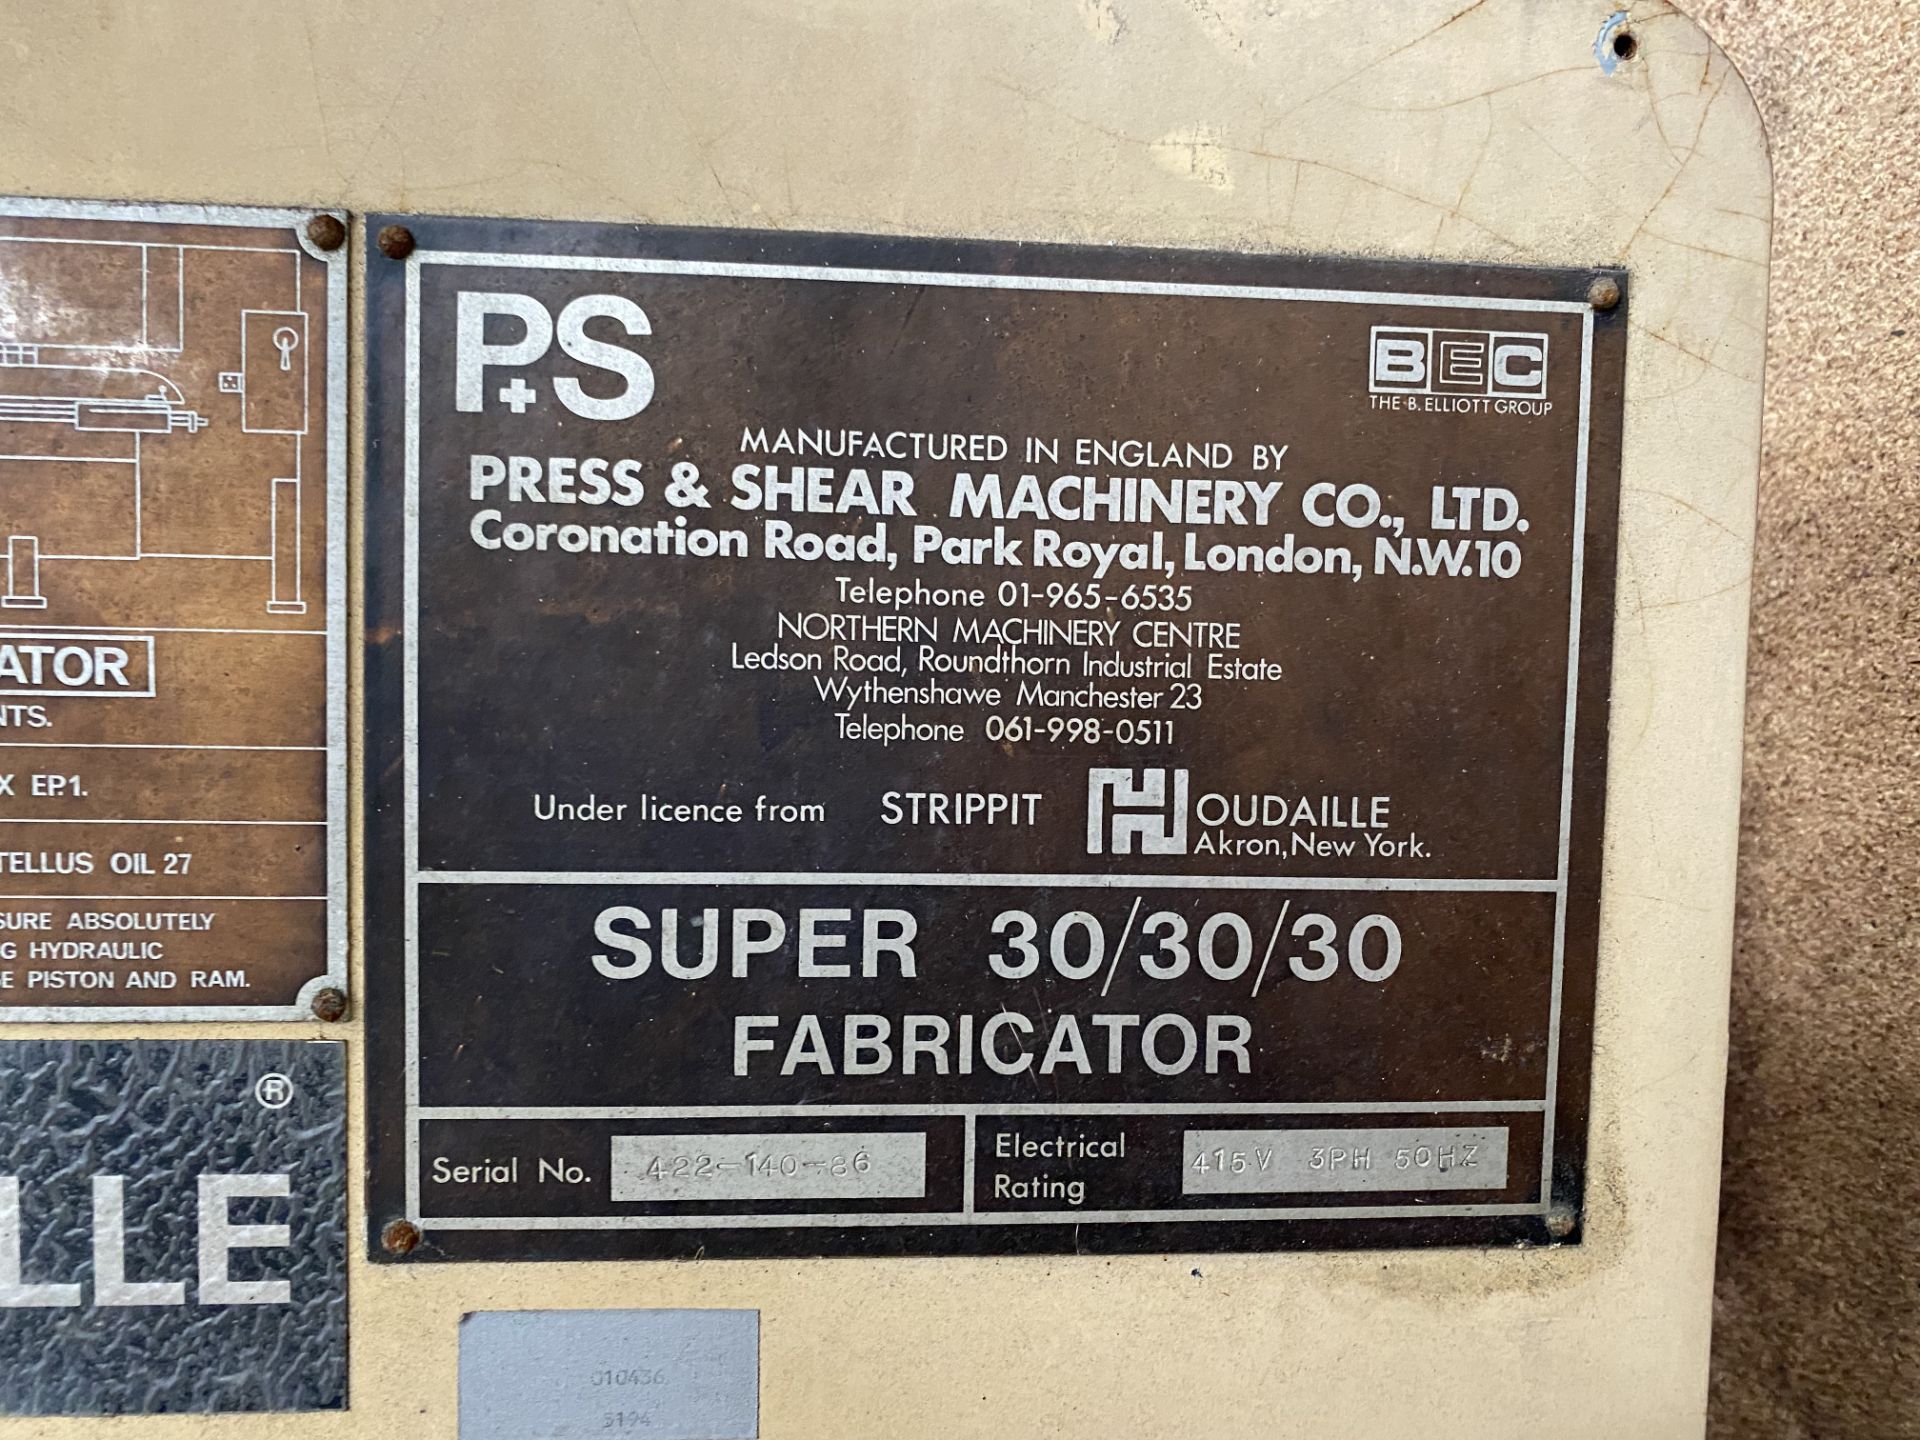 P+S STRIPPIT SUPER 30/30/30 FABRICATOR HOLE PUNCHING & NOTCHING MACHINE, serial no. 422-140-86, - Image 5 of 10